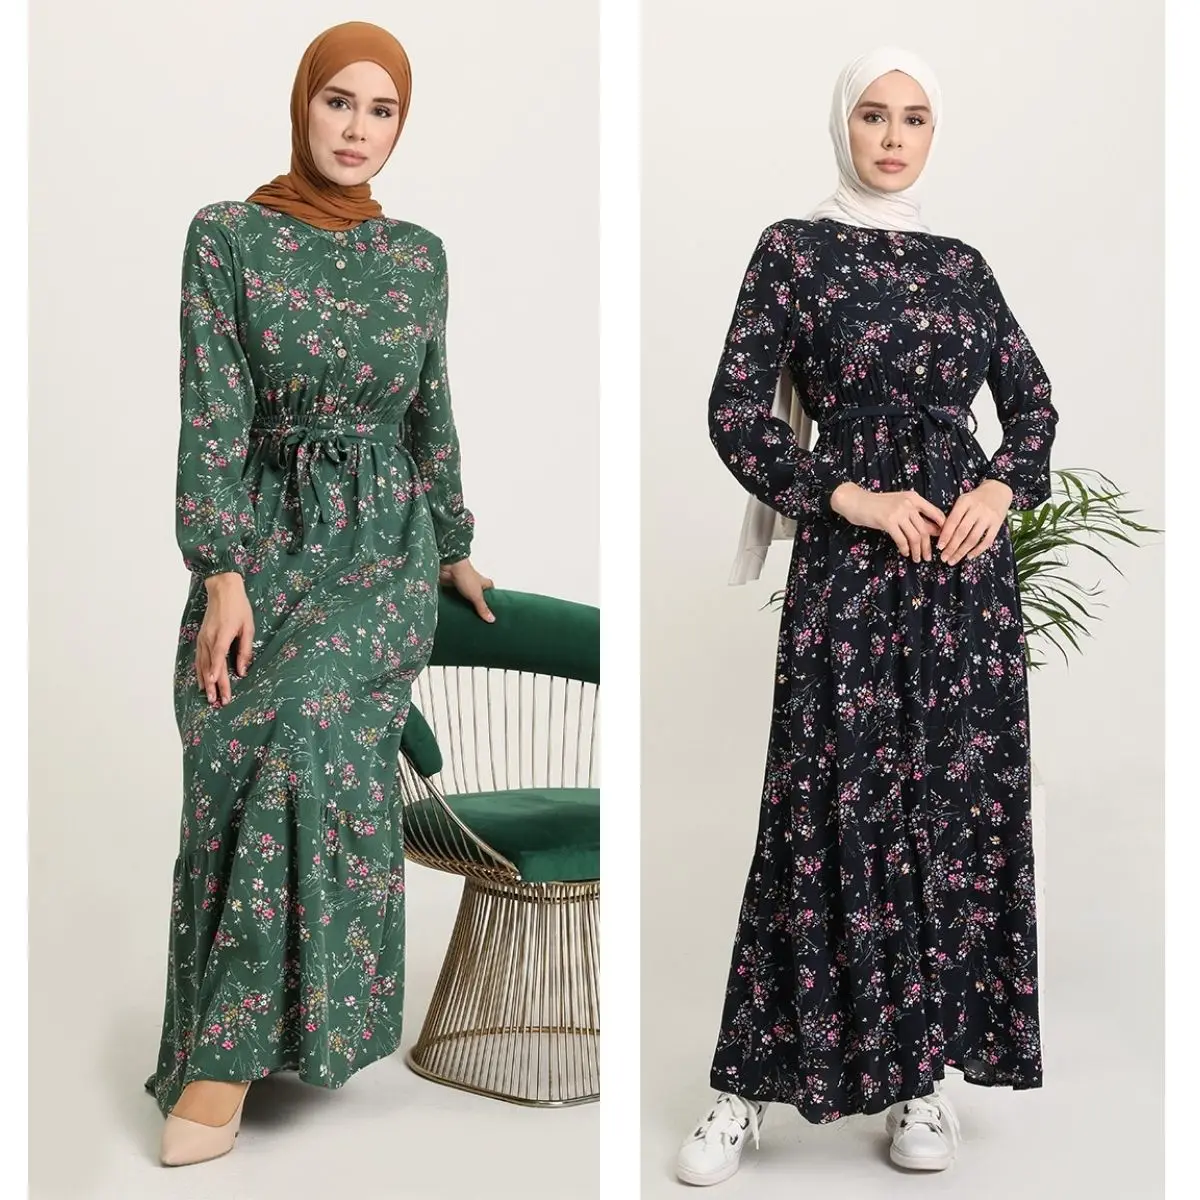 Floral Pattern Viscose Dress Unlined Long Sleeve Seasonal Buttoned Belted Women Muslim Fashion Hijab  Clothing  Islamic  Bonnet